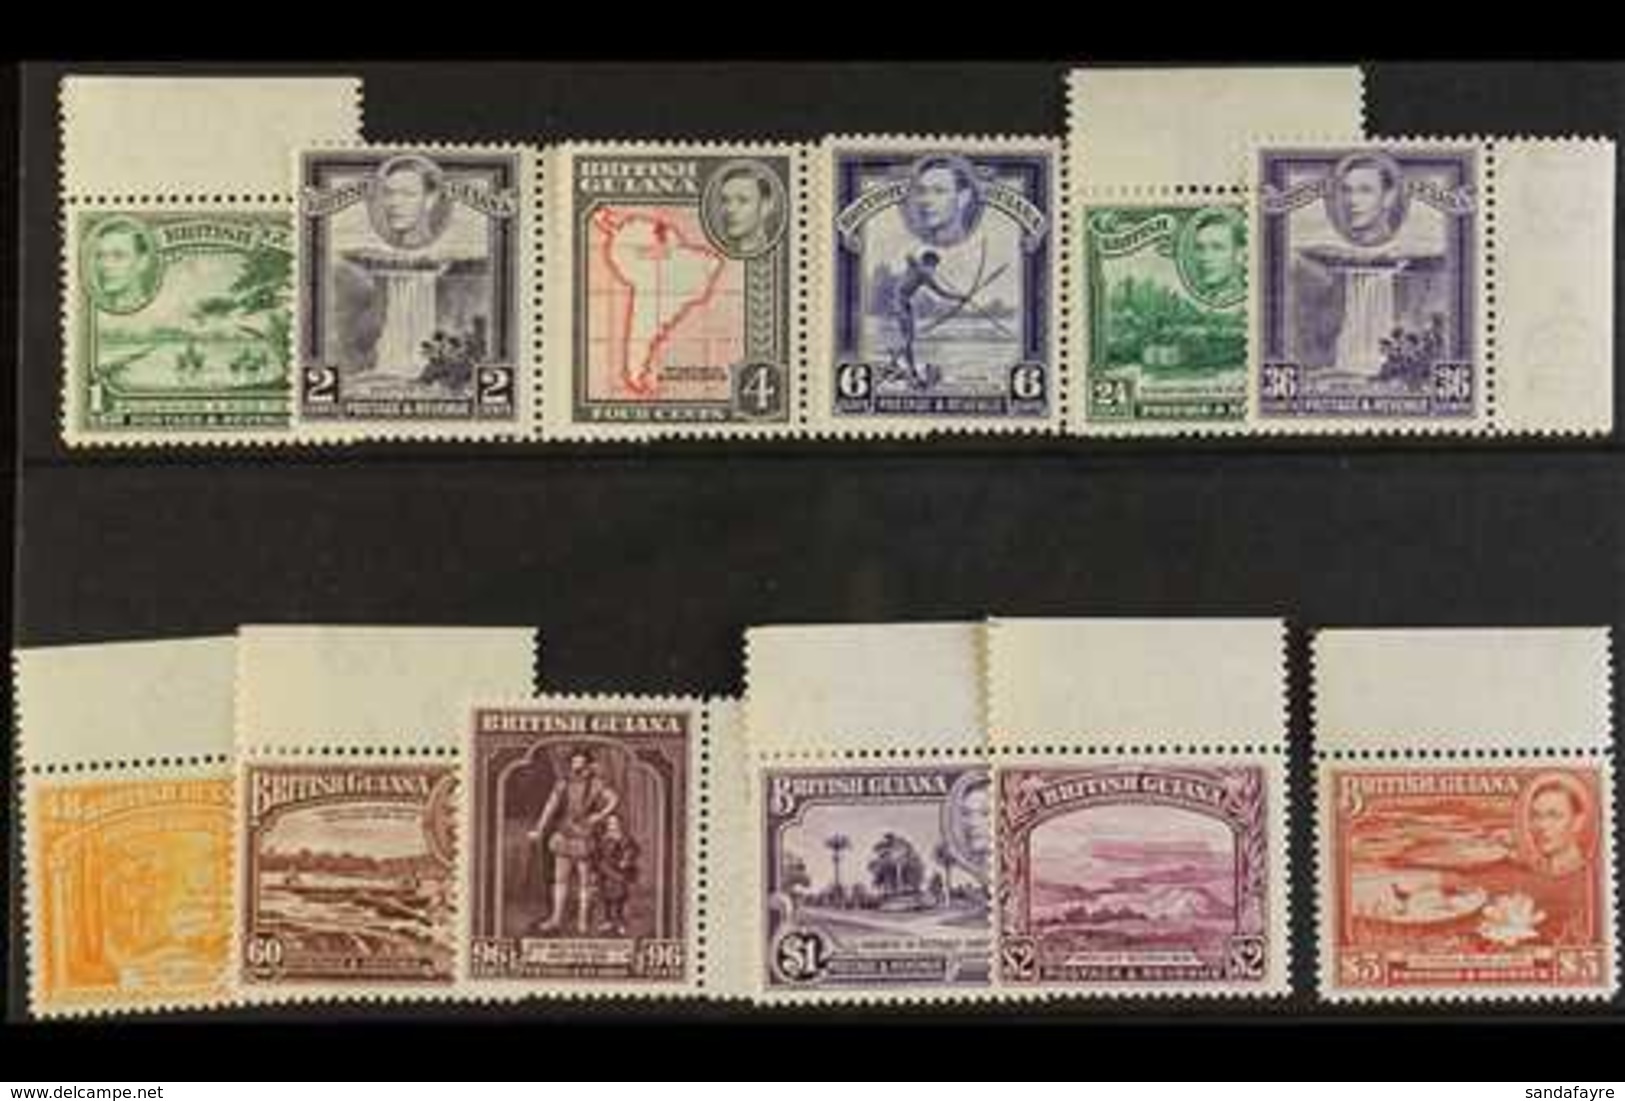 1938-52 Pictorial Definitive Set, SG 308a/19, Never Hinge Mint Marginals Set (12 Stamps) For More Images, Please Visit H - Brits-Guiana (...-1966)